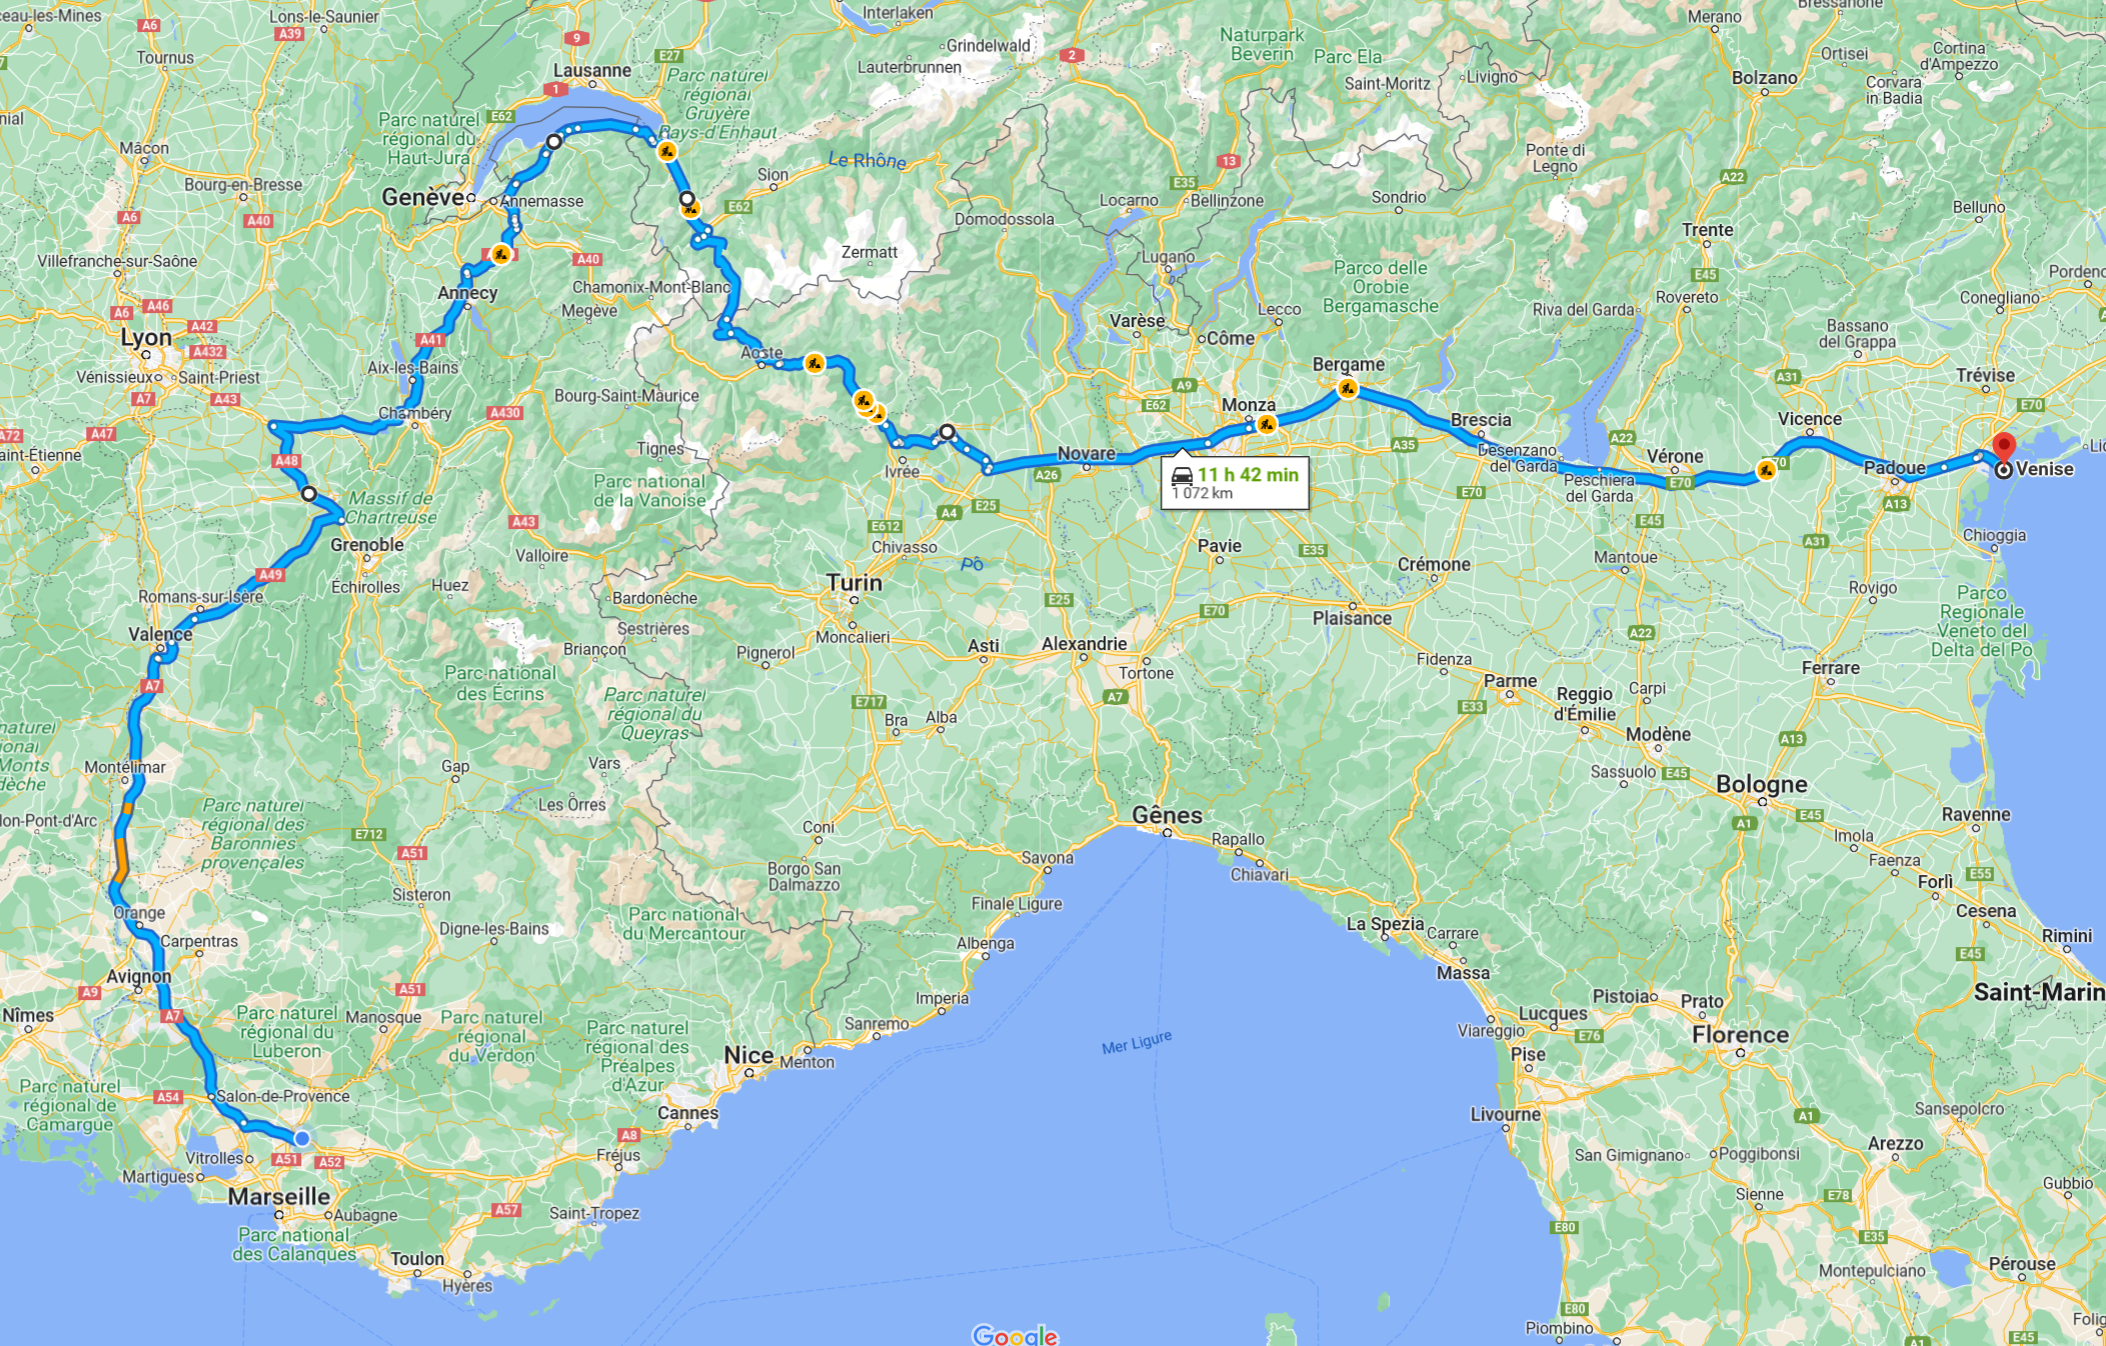 The way back over Padova, Verona, the Garda lake, Biella, Martigny, and Thonon.